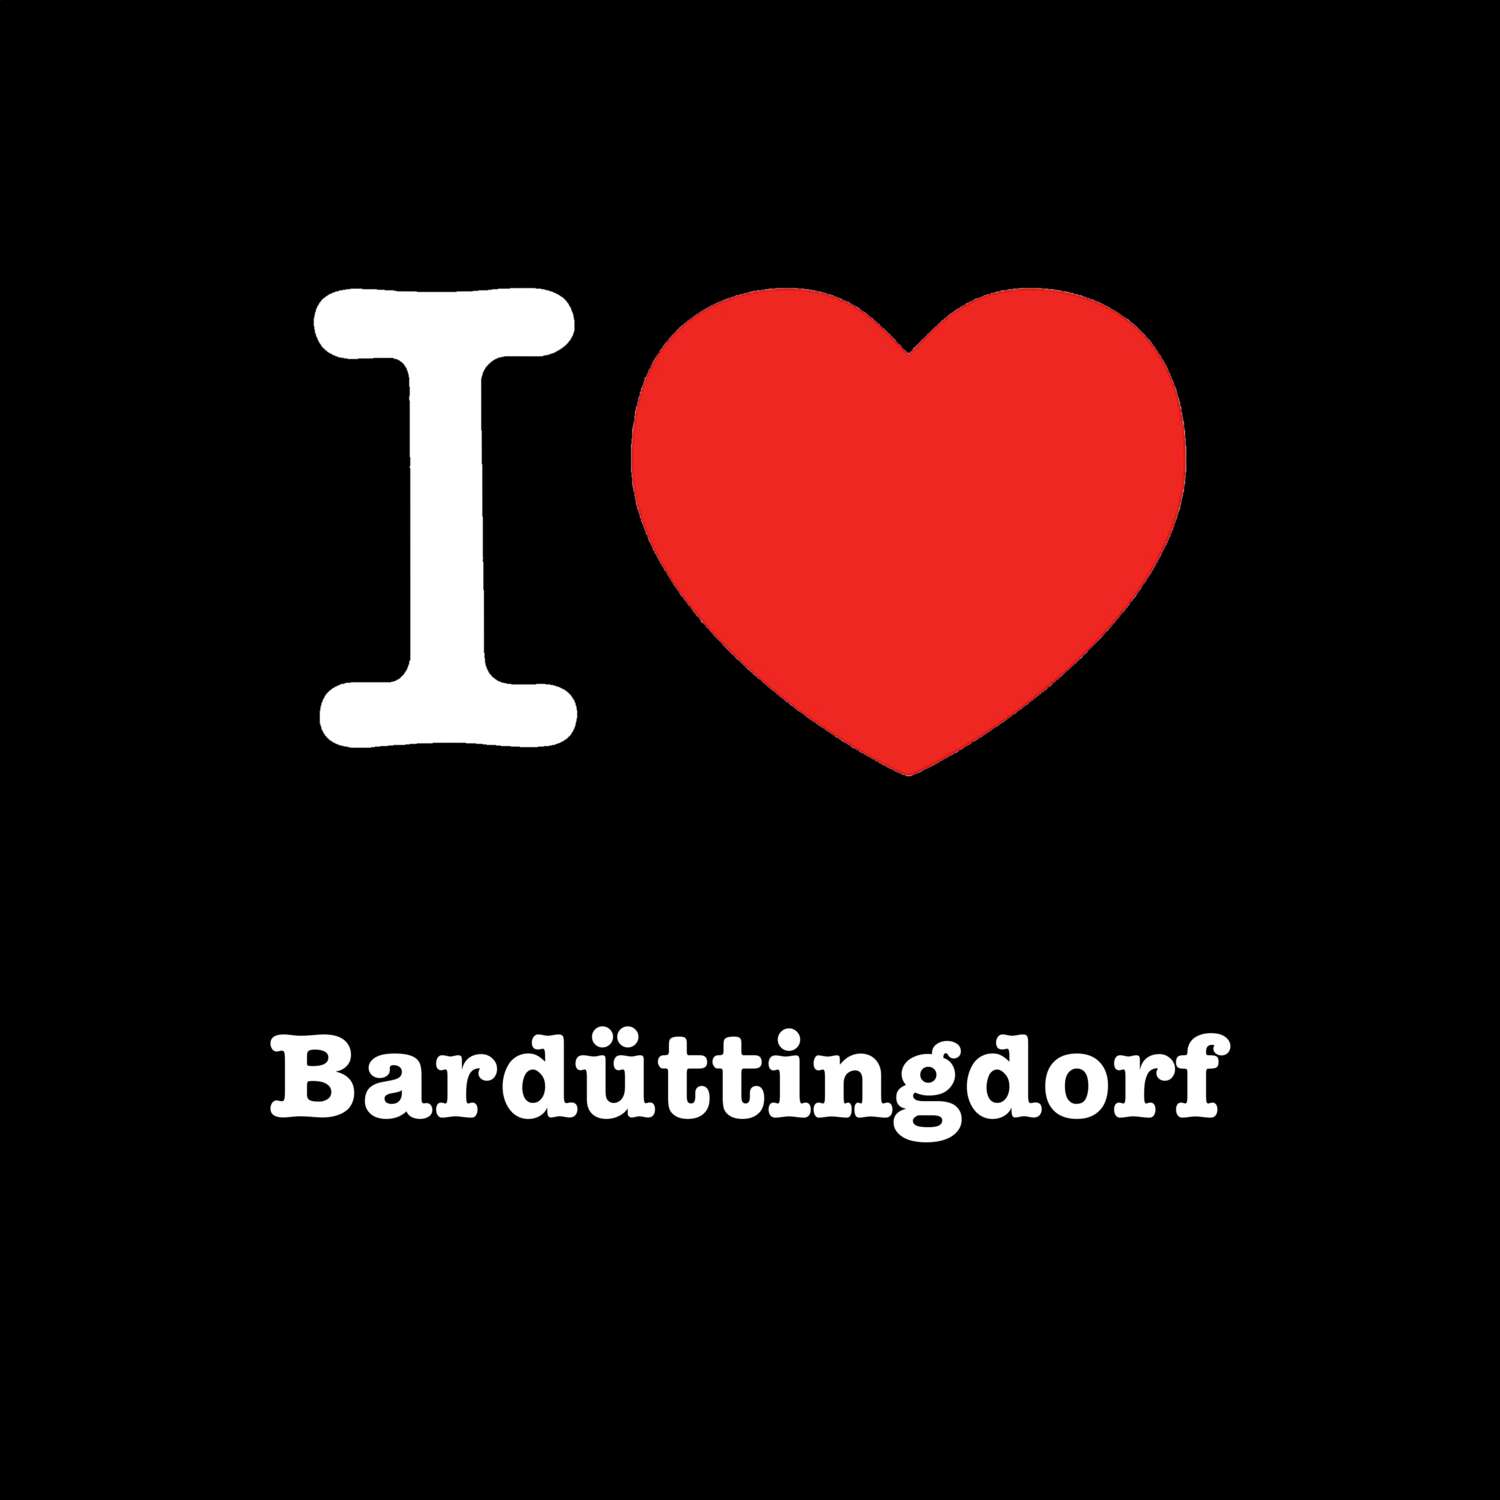 Bardüttingdorf T-Shirt »I love«